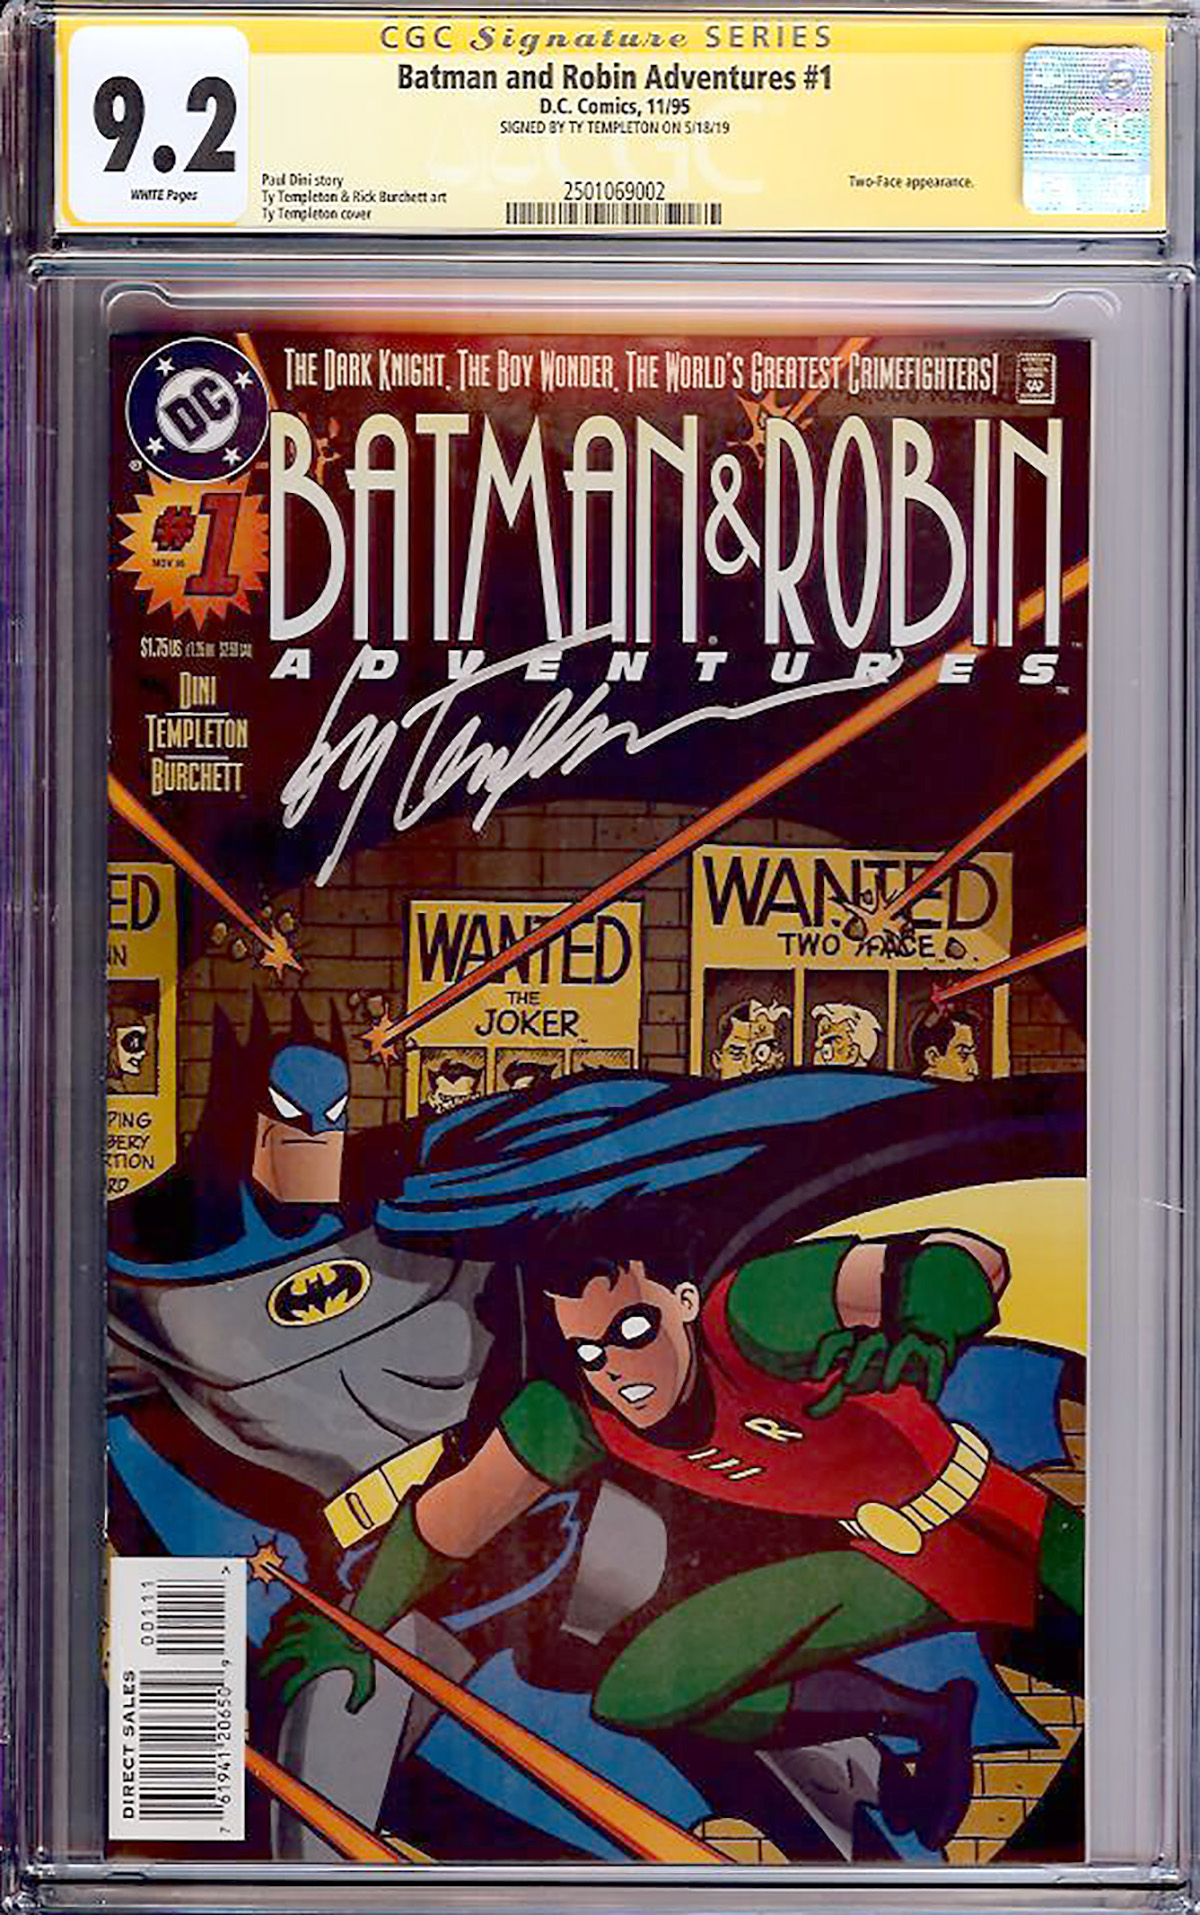 Batman and Robin Adventures #1 CGC 9.2 w CGC Signature SERIES